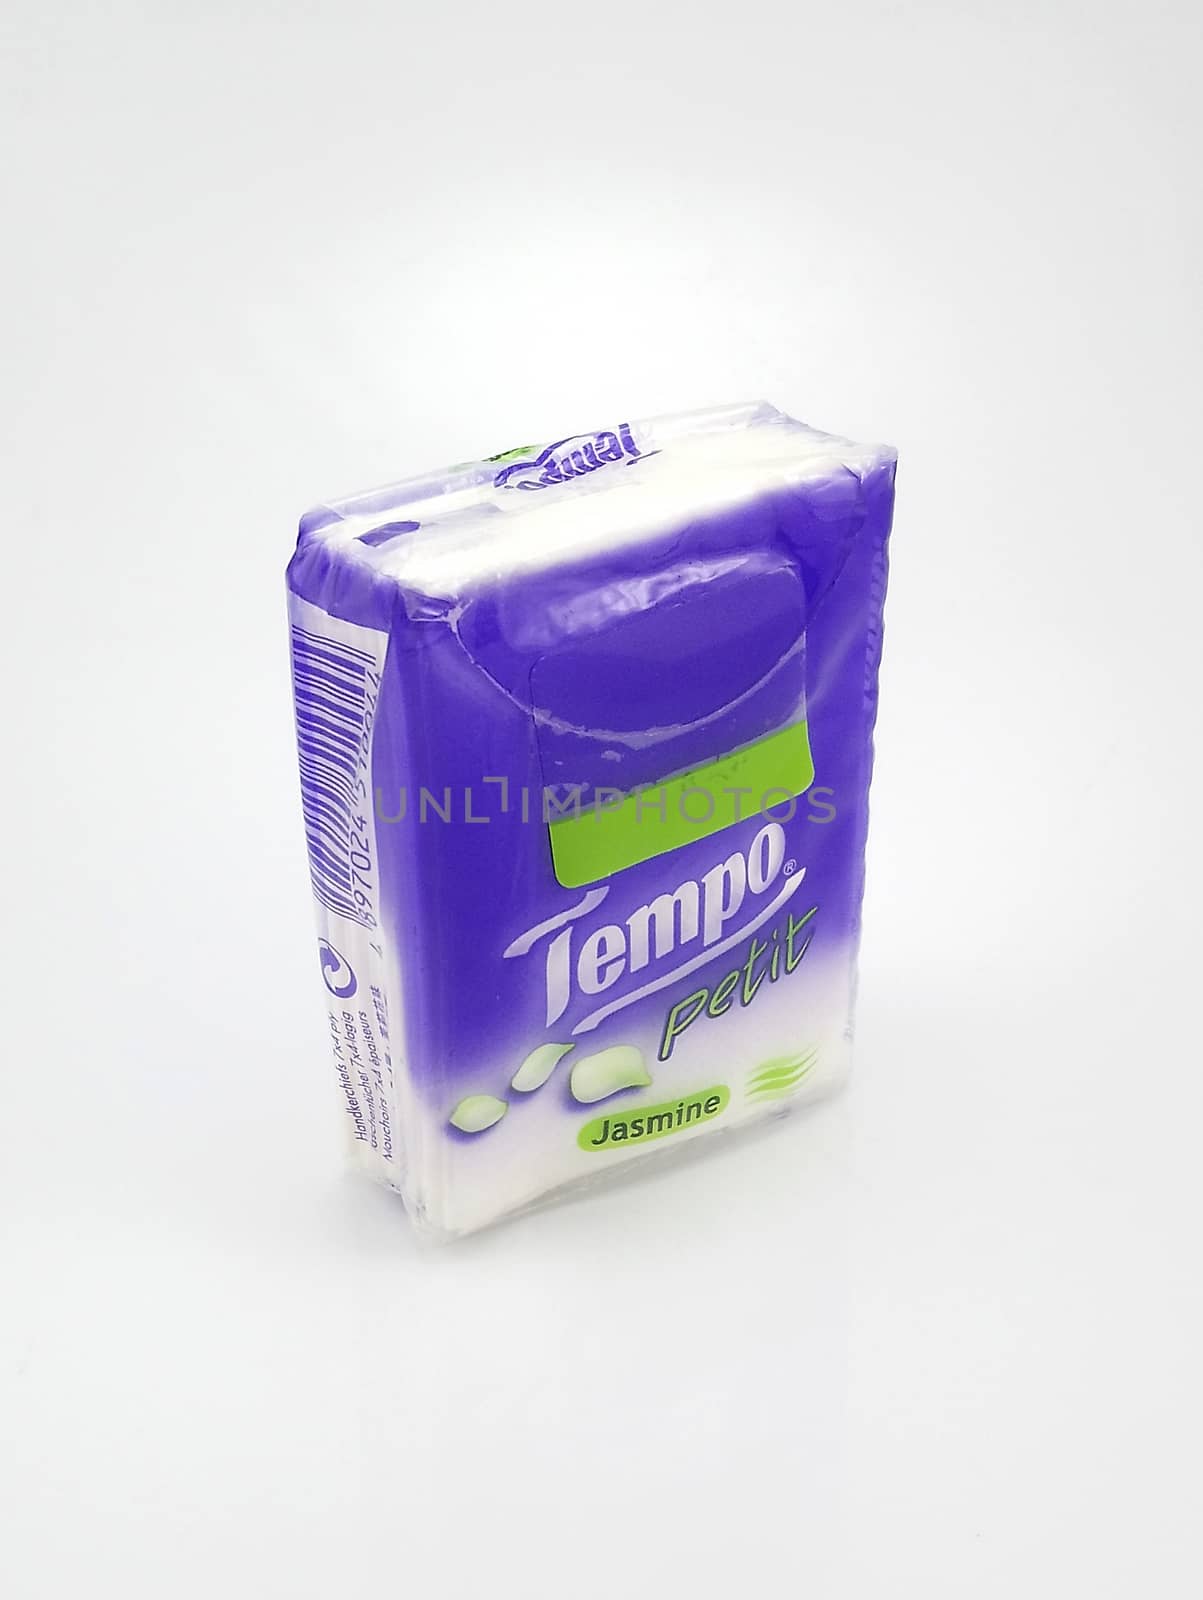 Tempo petit jasmine tissue paper in Manila, Philippines by imwaltersy